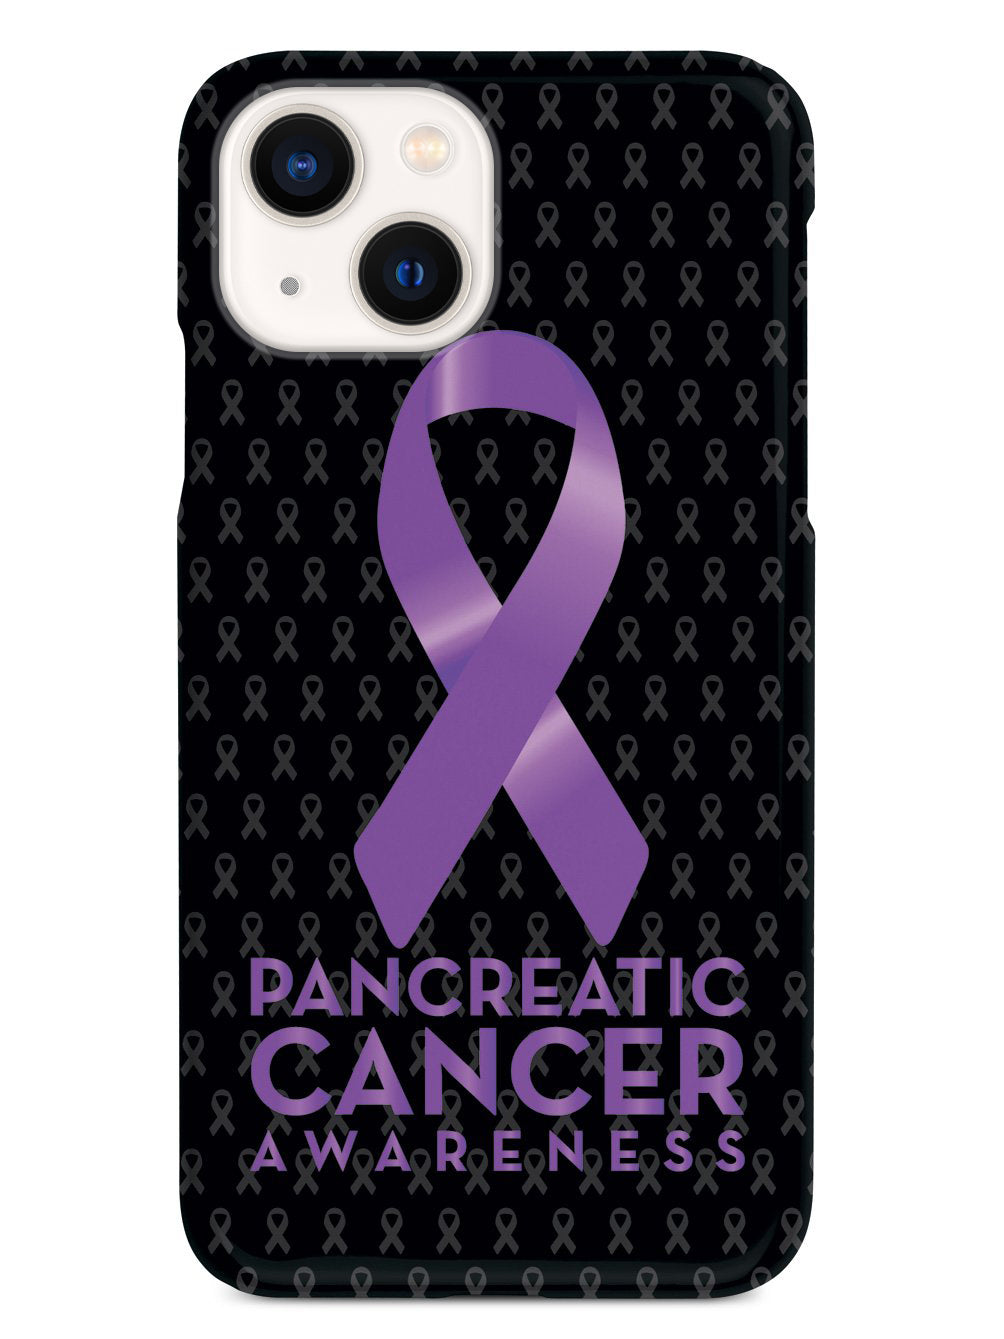 Pancreatic Cancer Awareness - Black Case